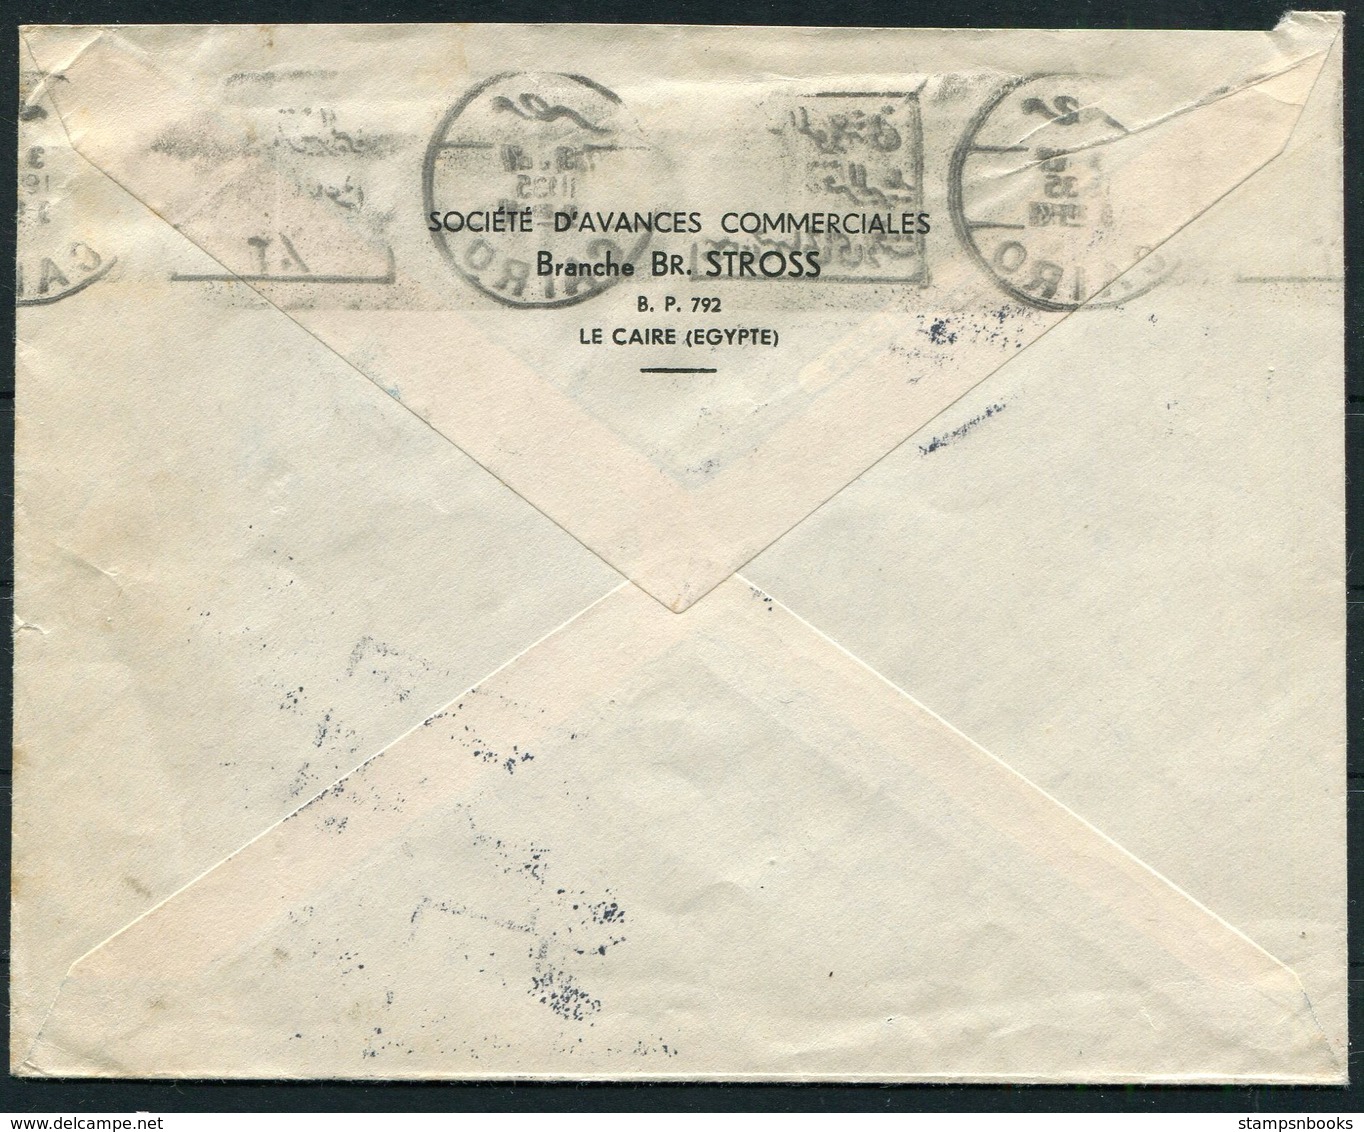 1935 Egypt Societe D'Avances Commerciales, Cairo Cover - Osnabruck Germany.Jusqu'a Par Avion, Airmail. Postage Due, Taxe - Covers & Documents